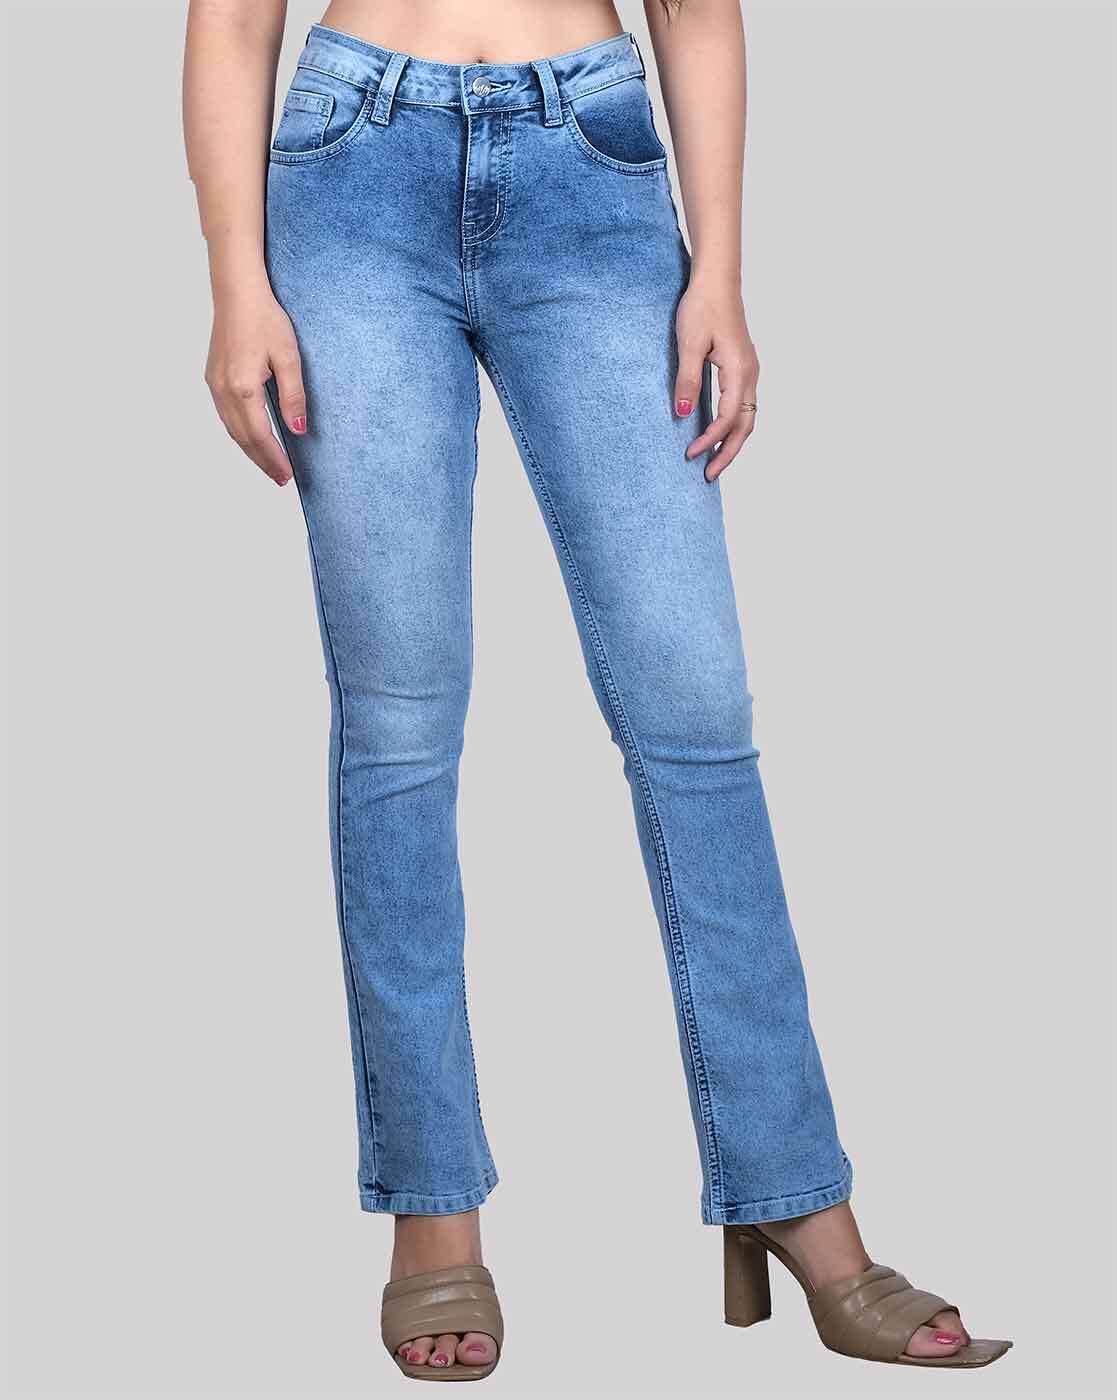 Ladies Slim Fit Light Blue Denim Jeans, Size: 28-32 at Rs 450/piece in Delhi